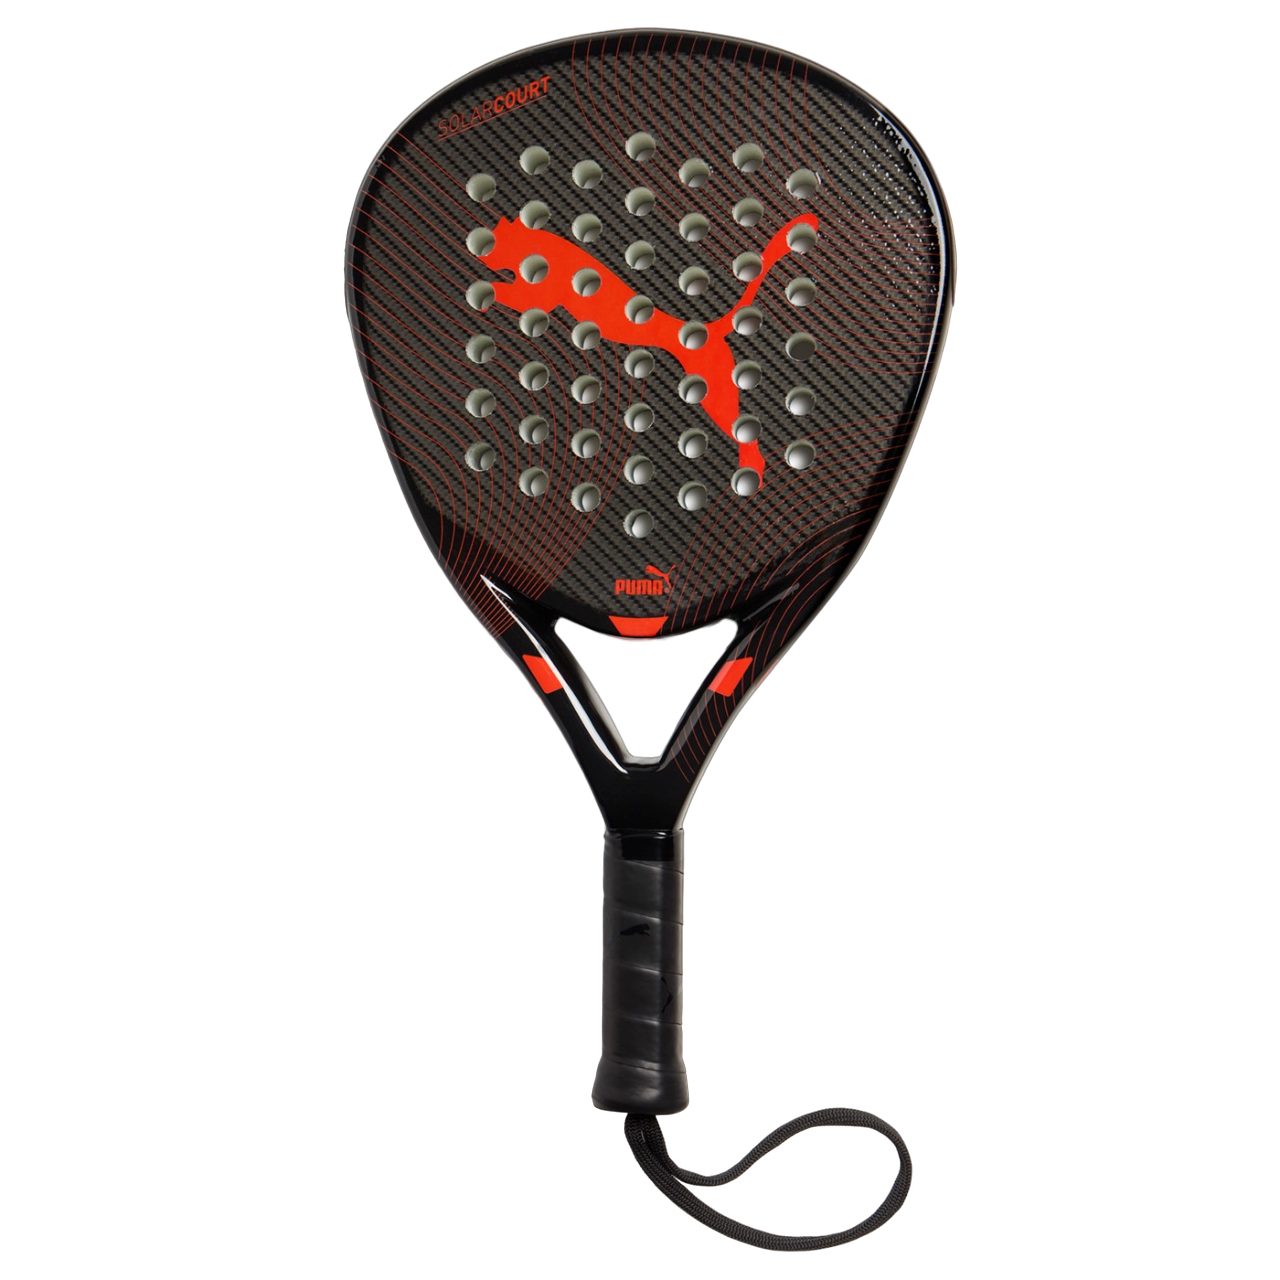 Puma SolarCOURT padel racket 049019 01 black red